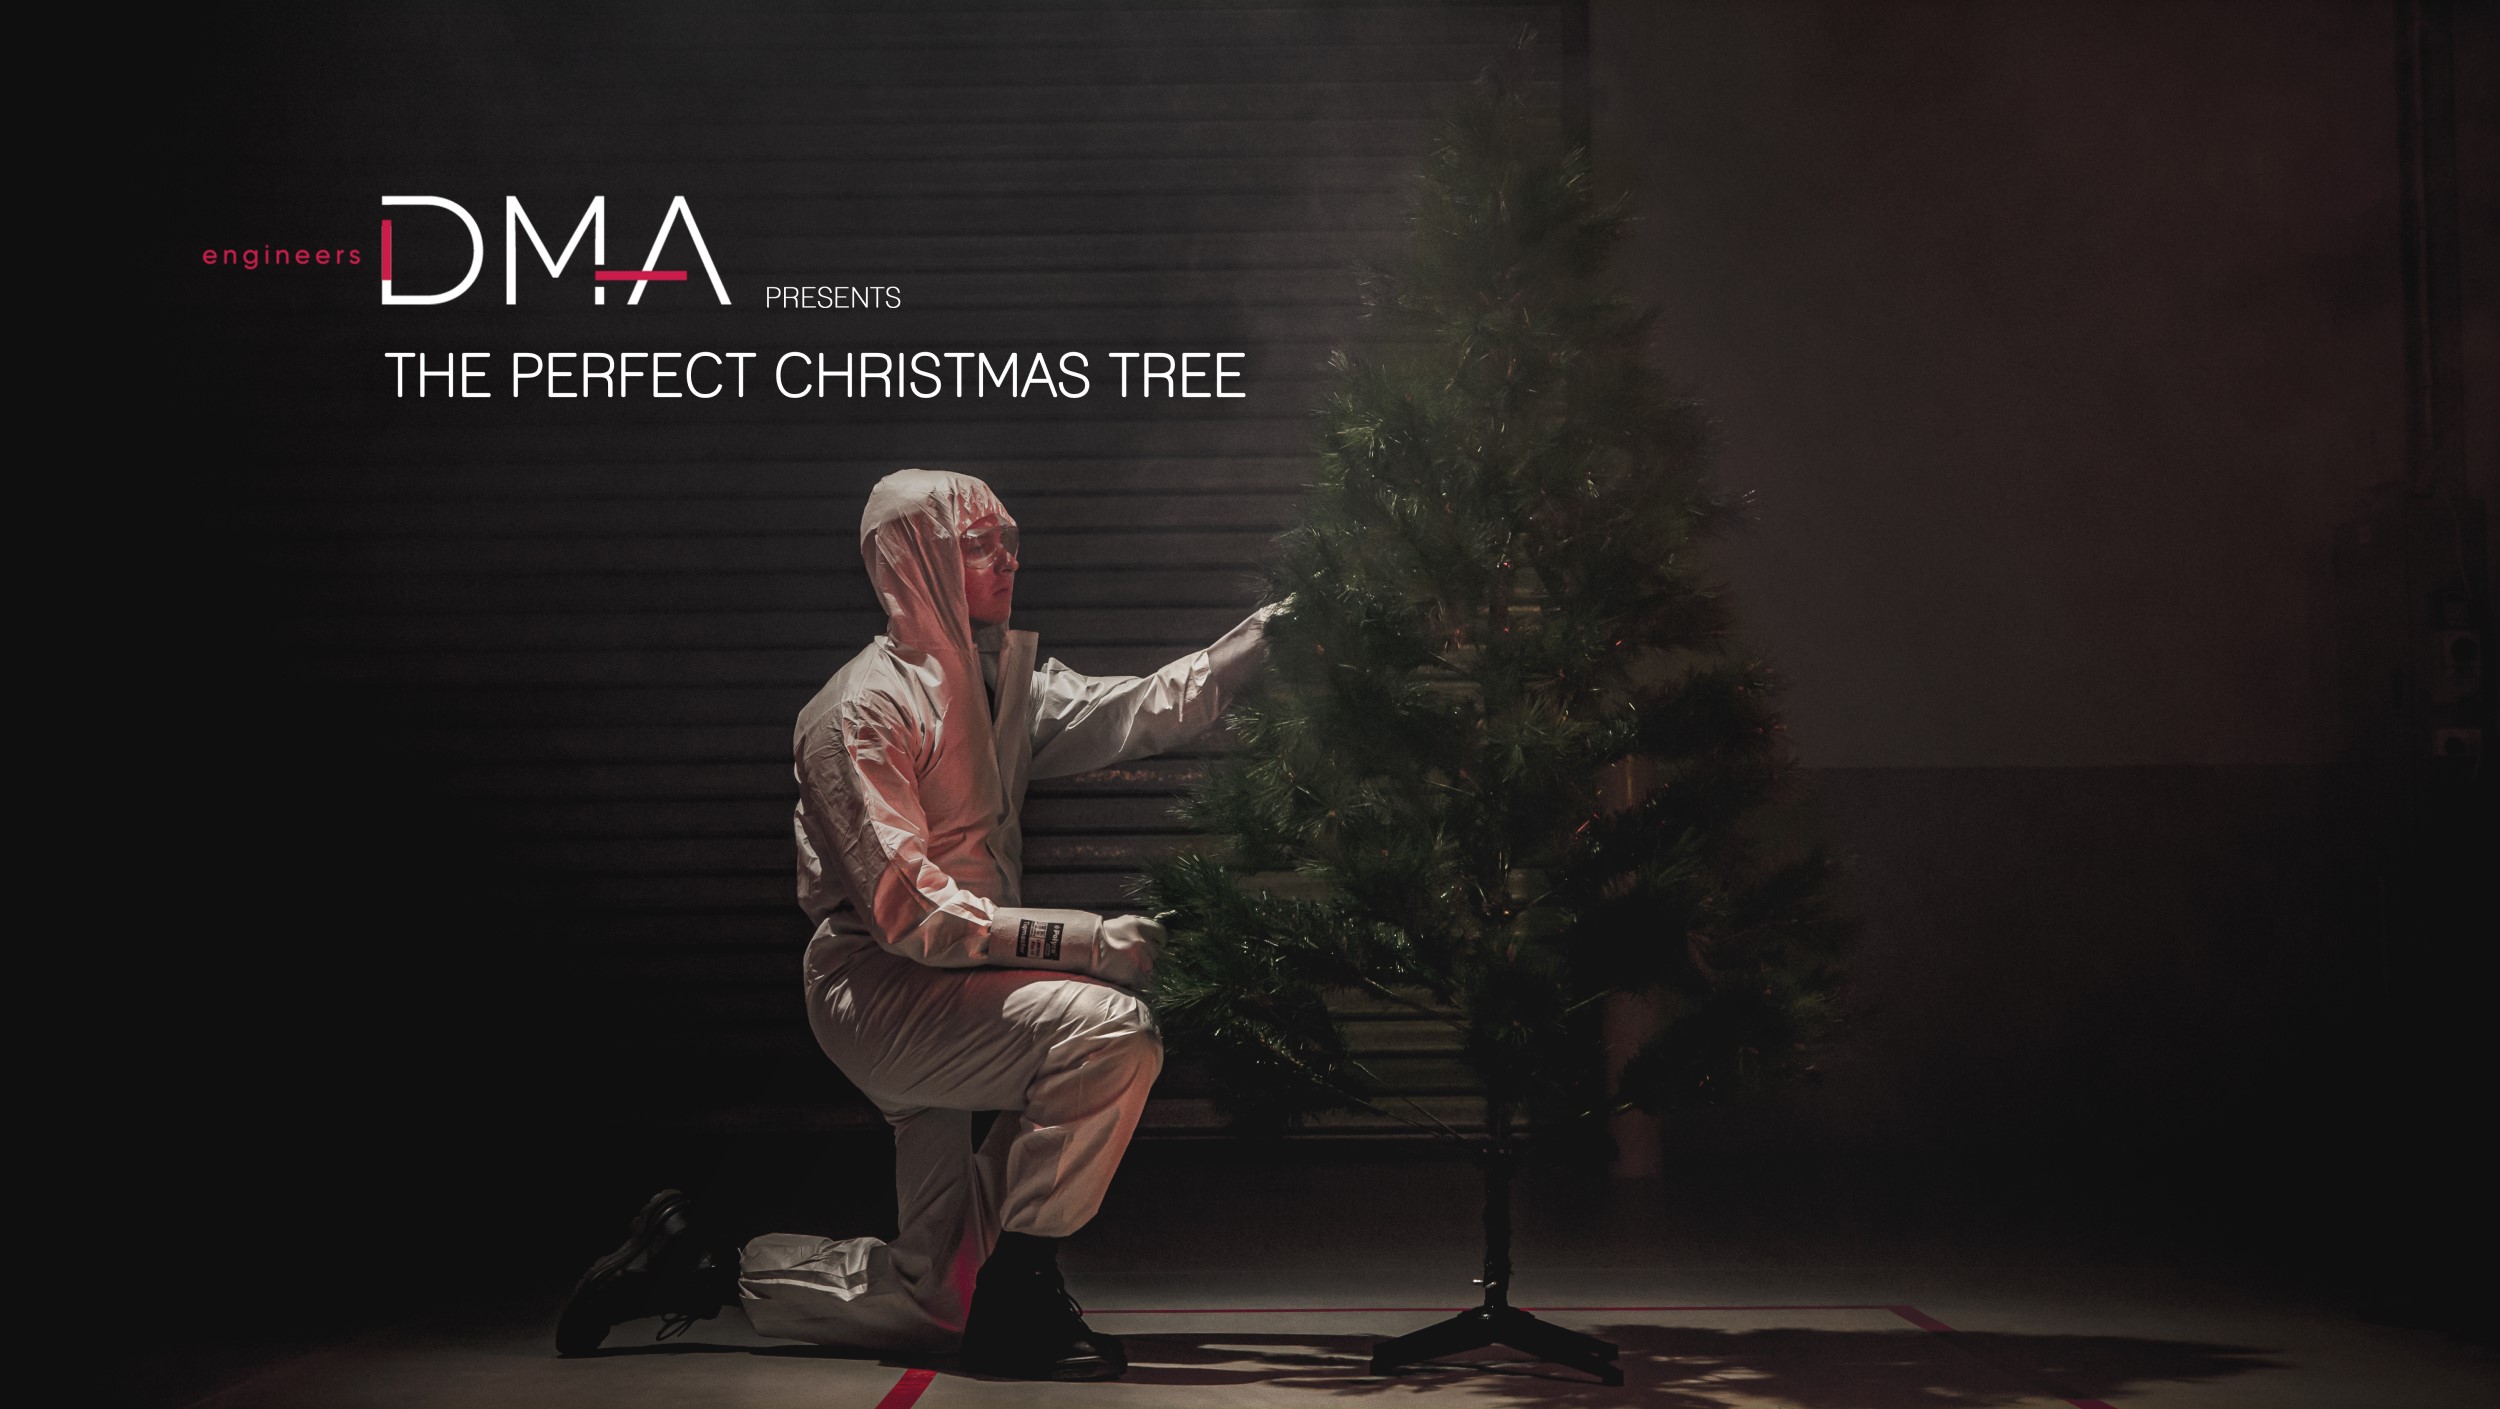 How to engineer the perfect Christmas tree DMA Engineers